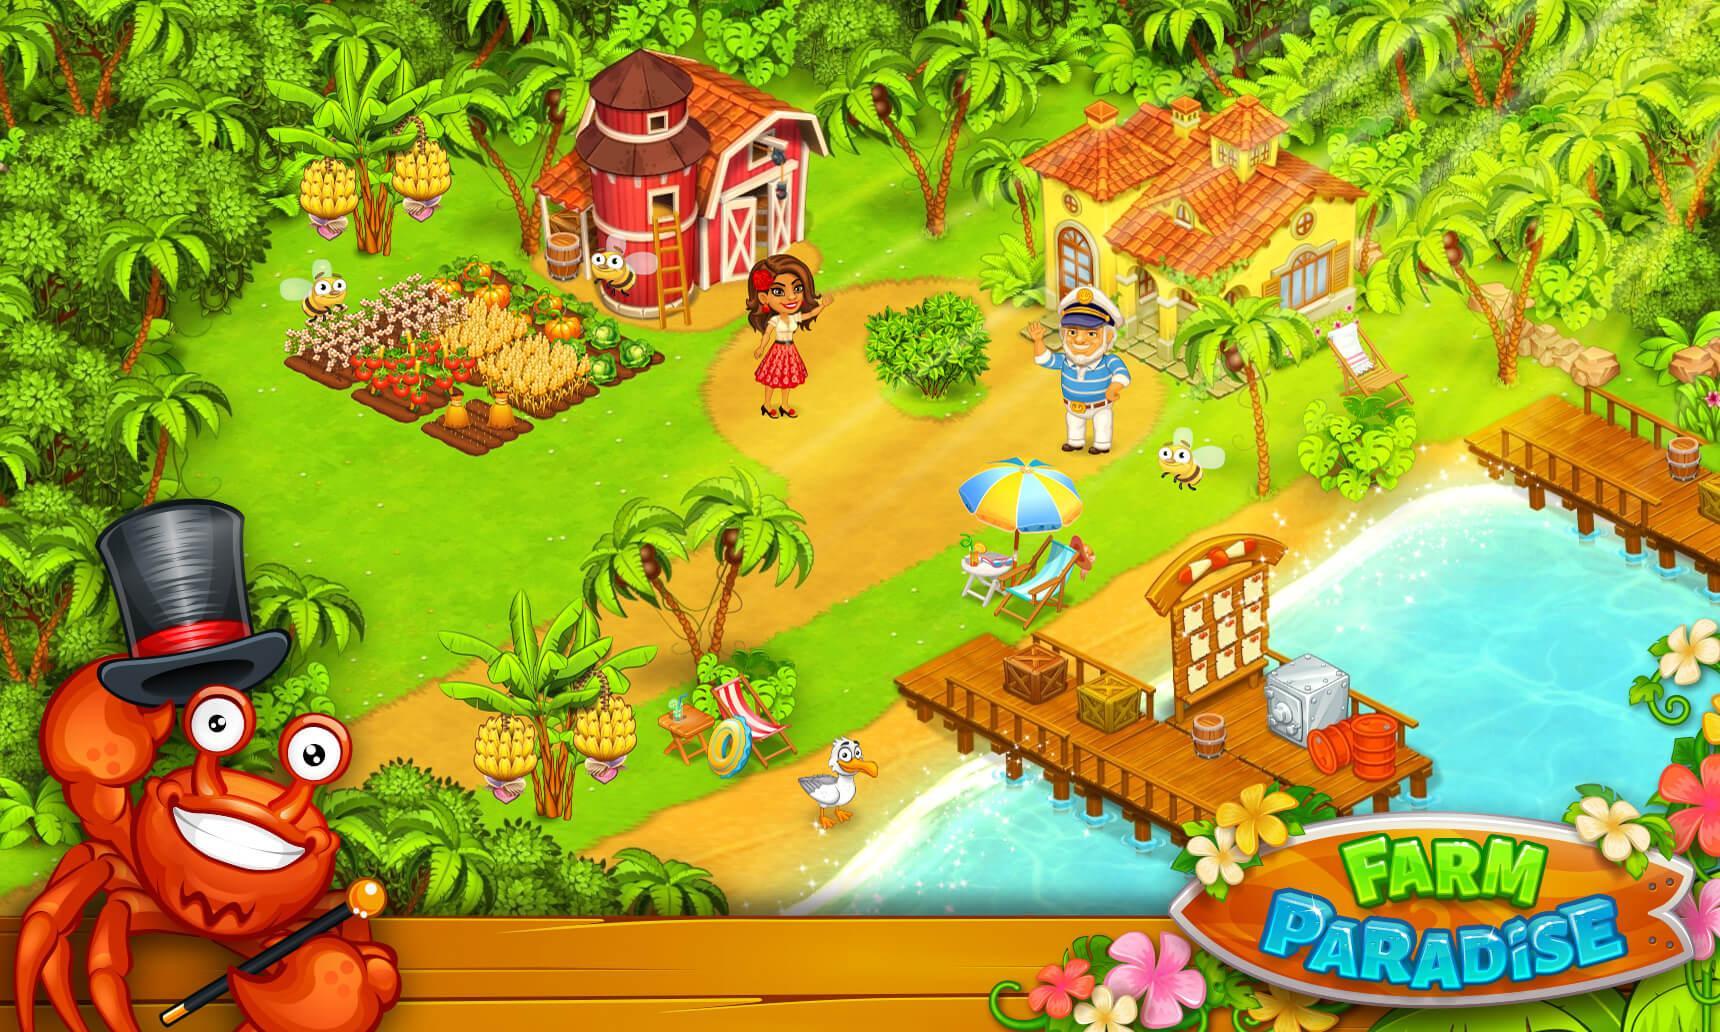 Farm Paradise Fun farm trade game at lost island 2.17 Screenshot 23